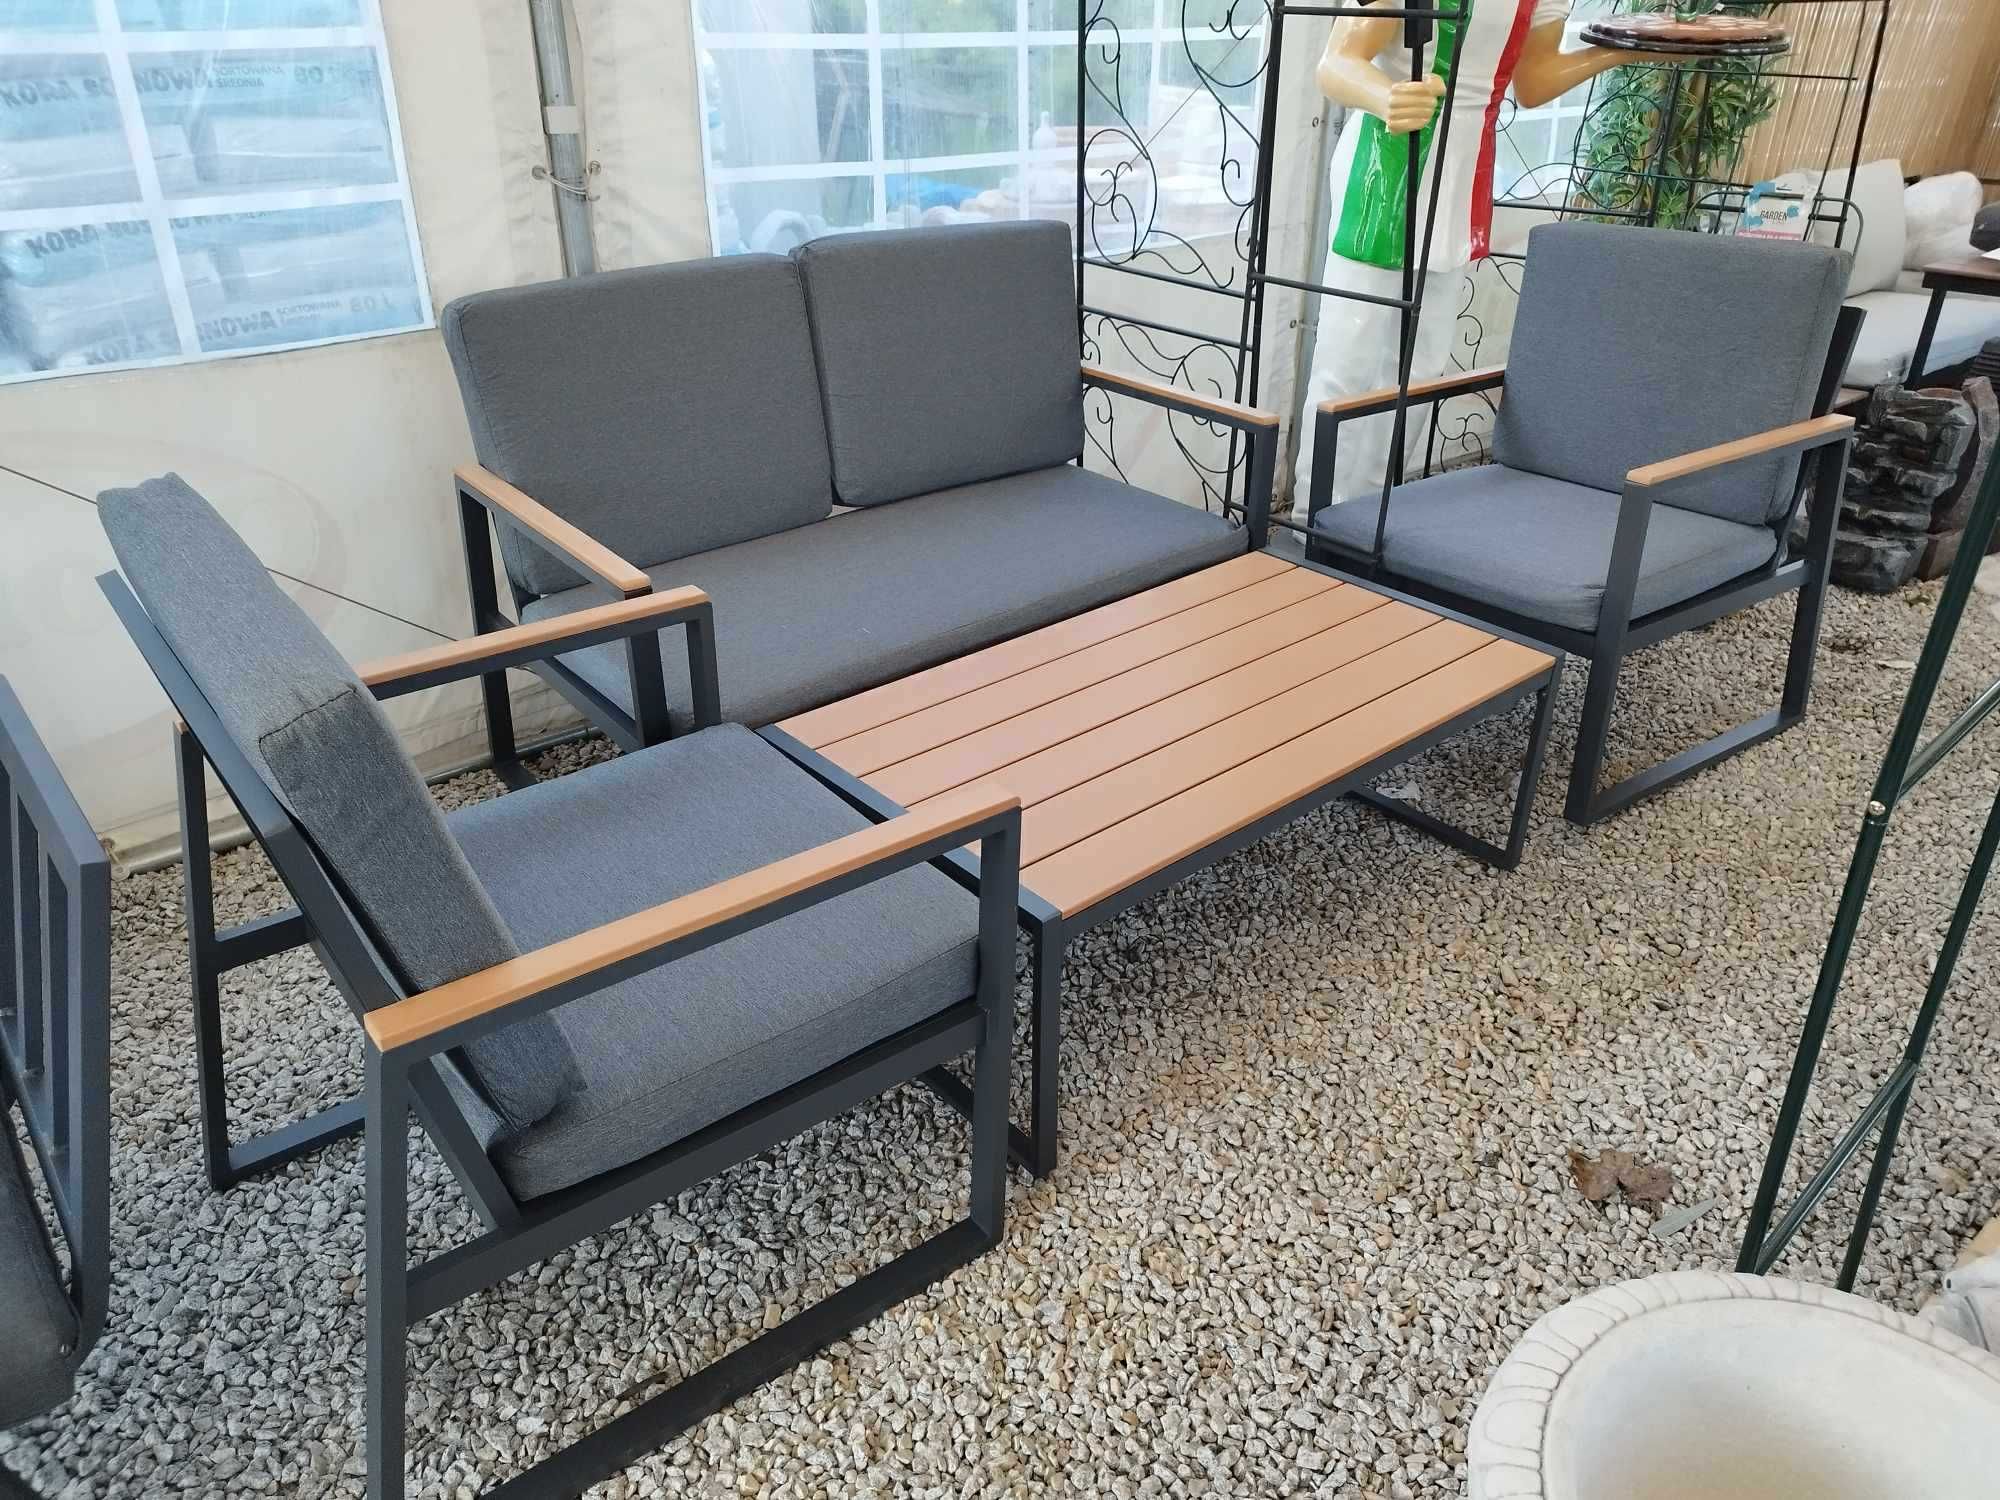 Meble ogrodowe aluminiowe sofa + 2 fotele + stolik szare poduchy